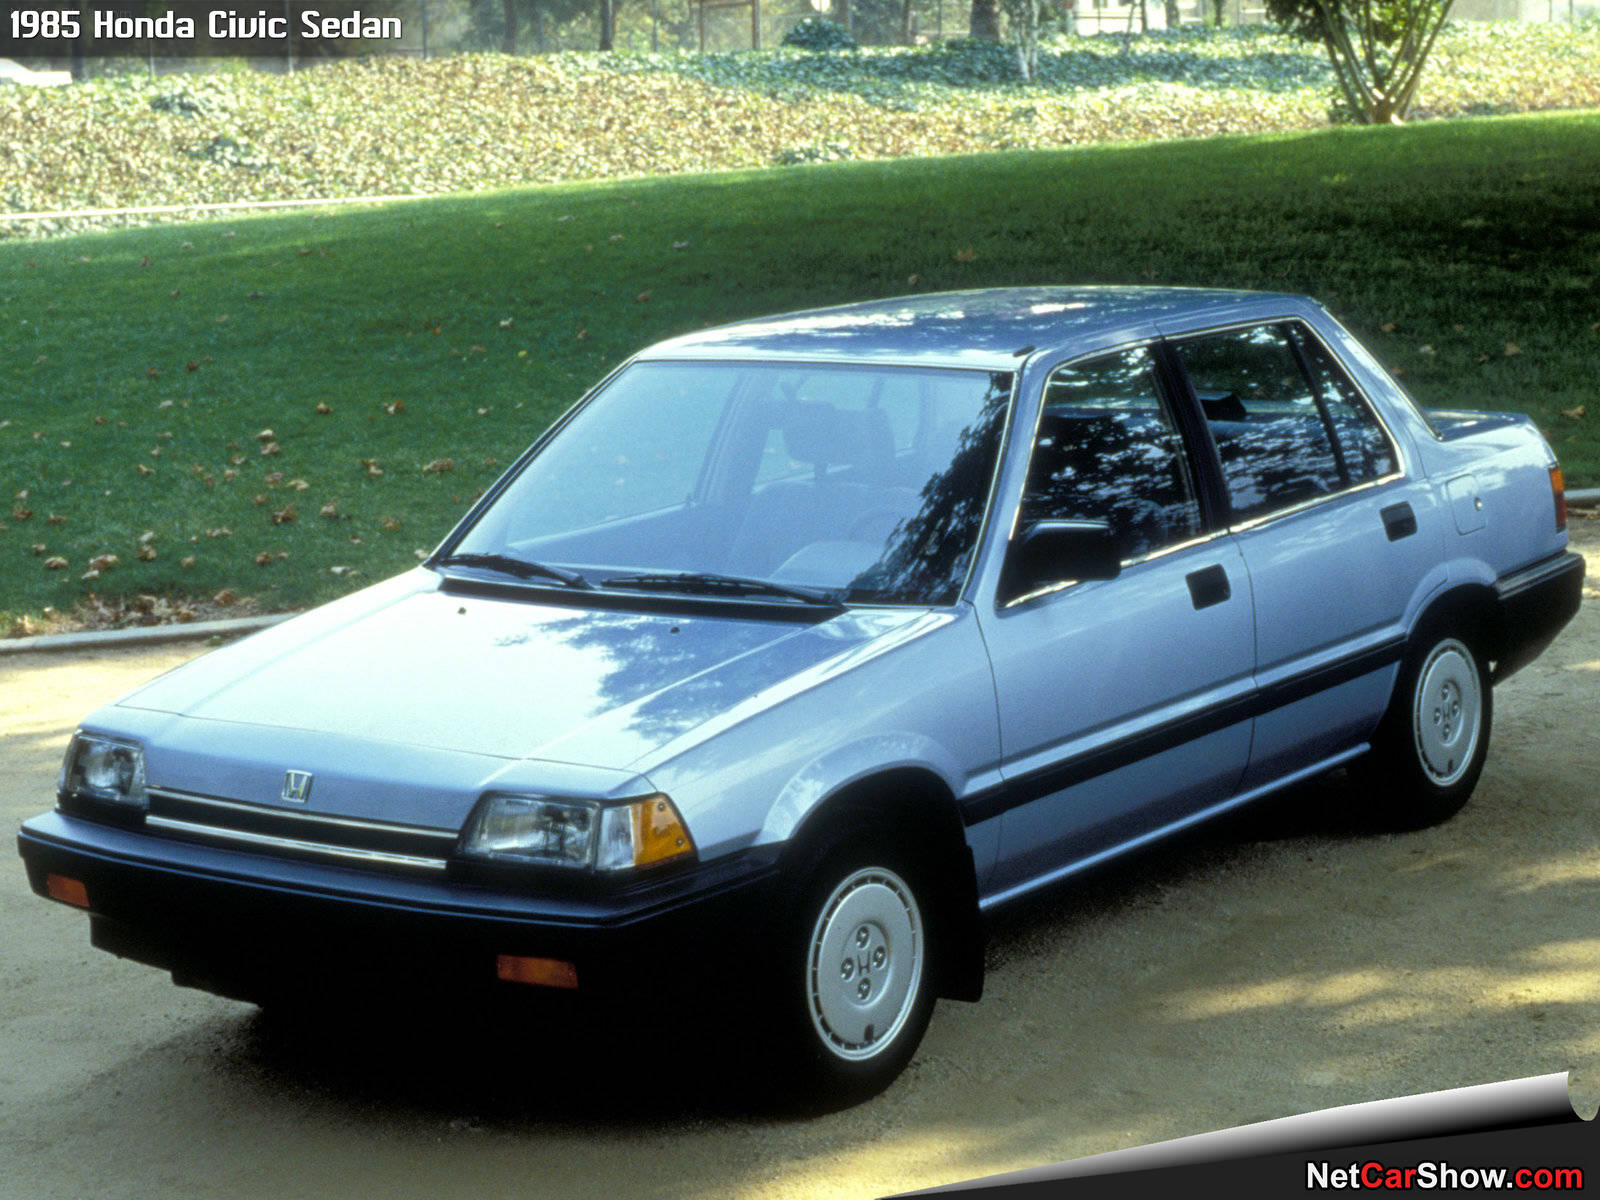 Honda-Civic_Sedan-1985-hd.jpg